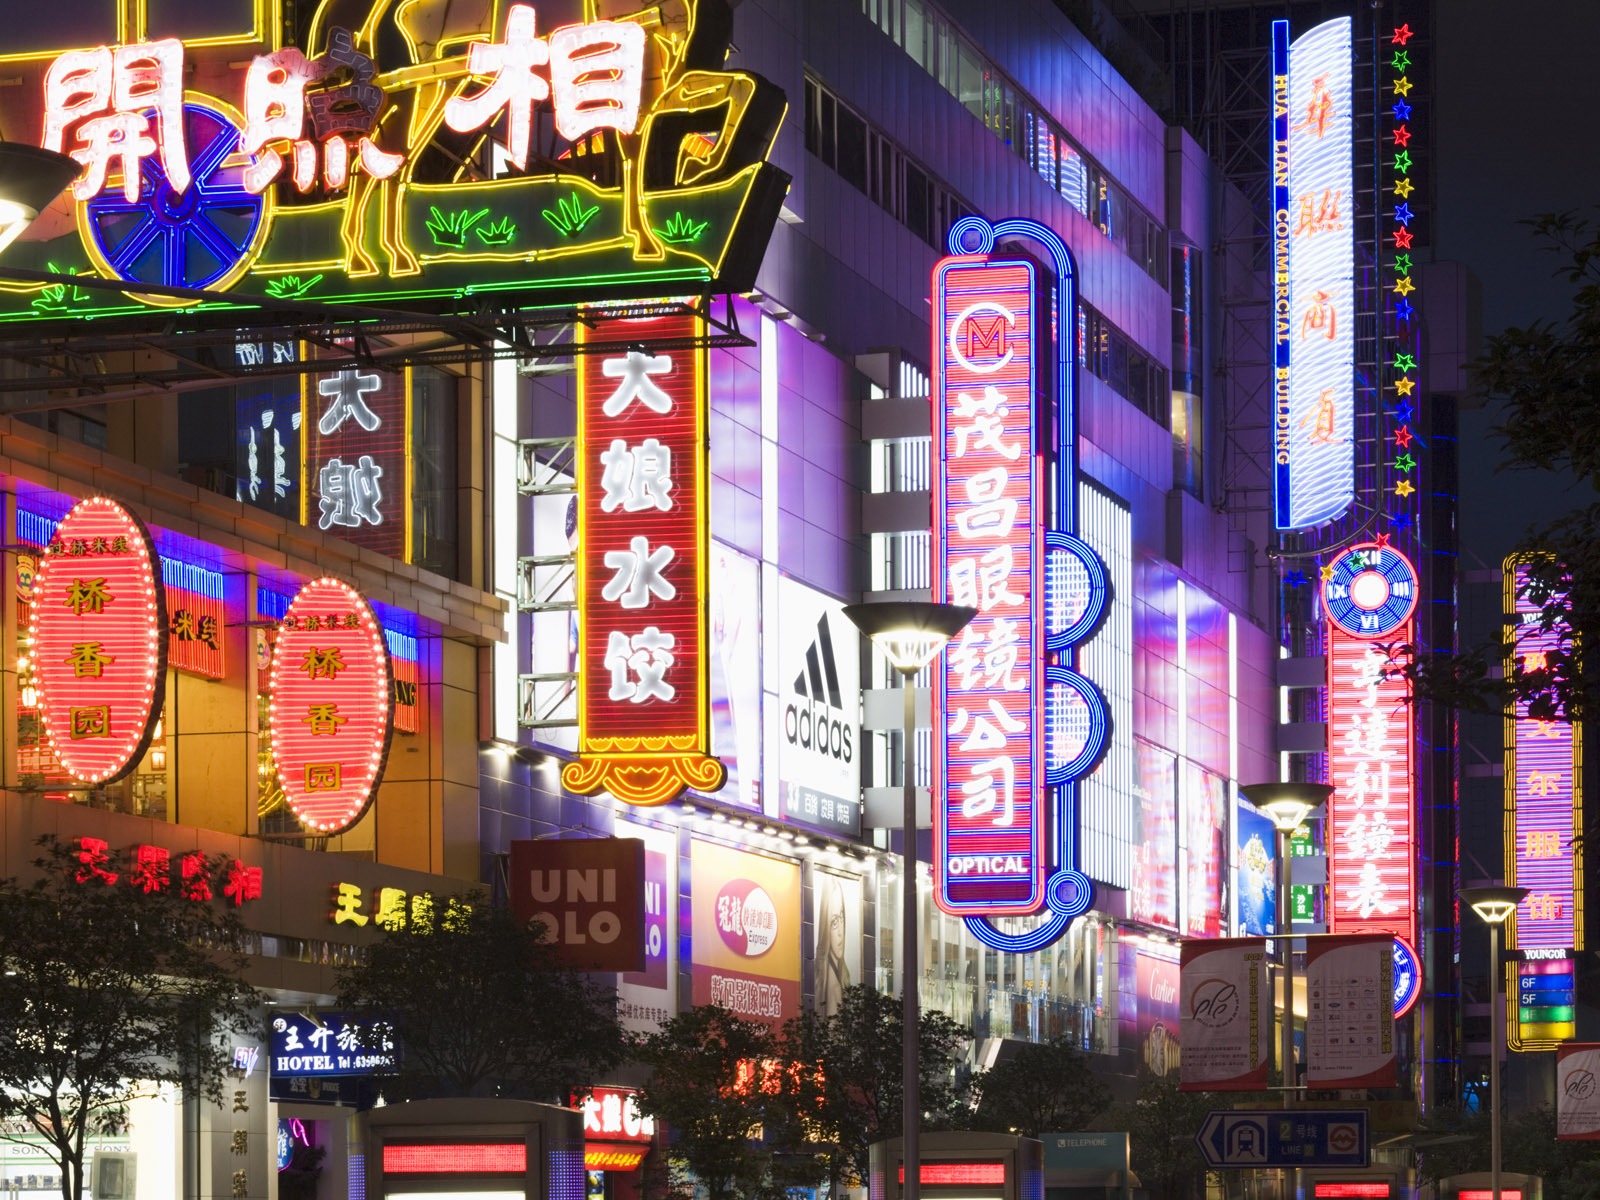 Vistazo de fondos de pantalla urbanas de China #14 - 1600x1200